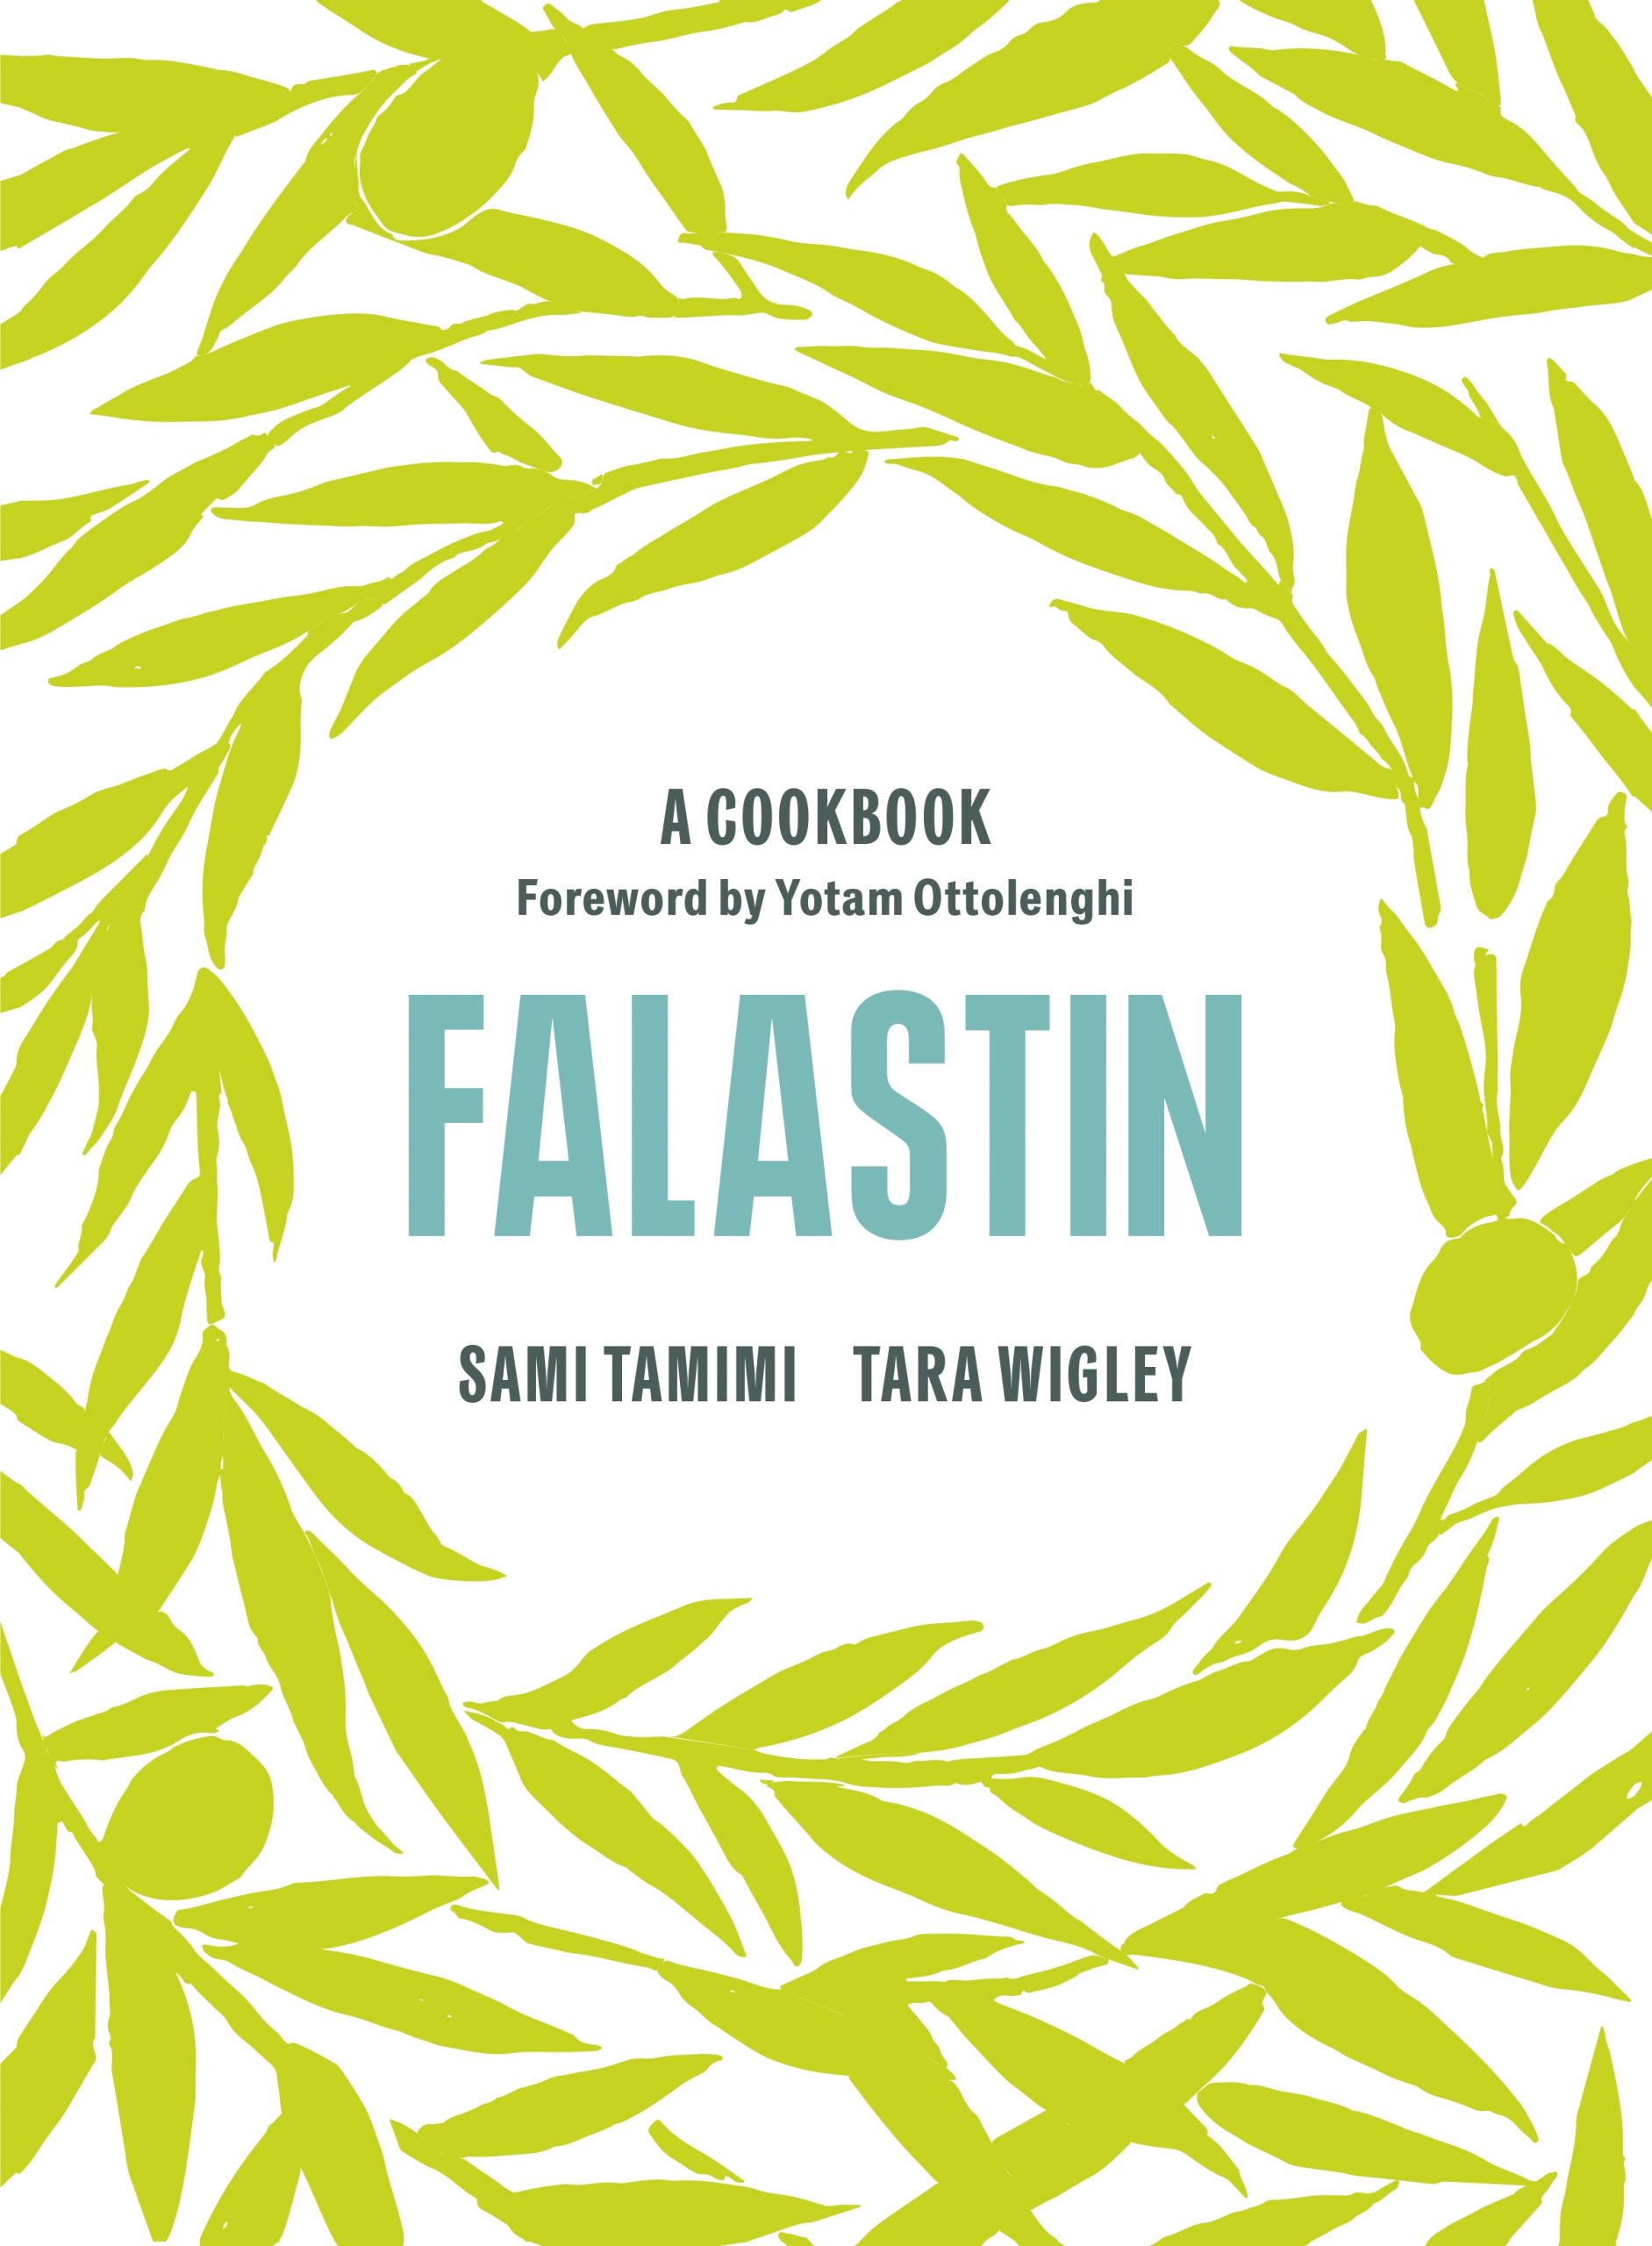 Copy of book cover: Falastin- A cookbook